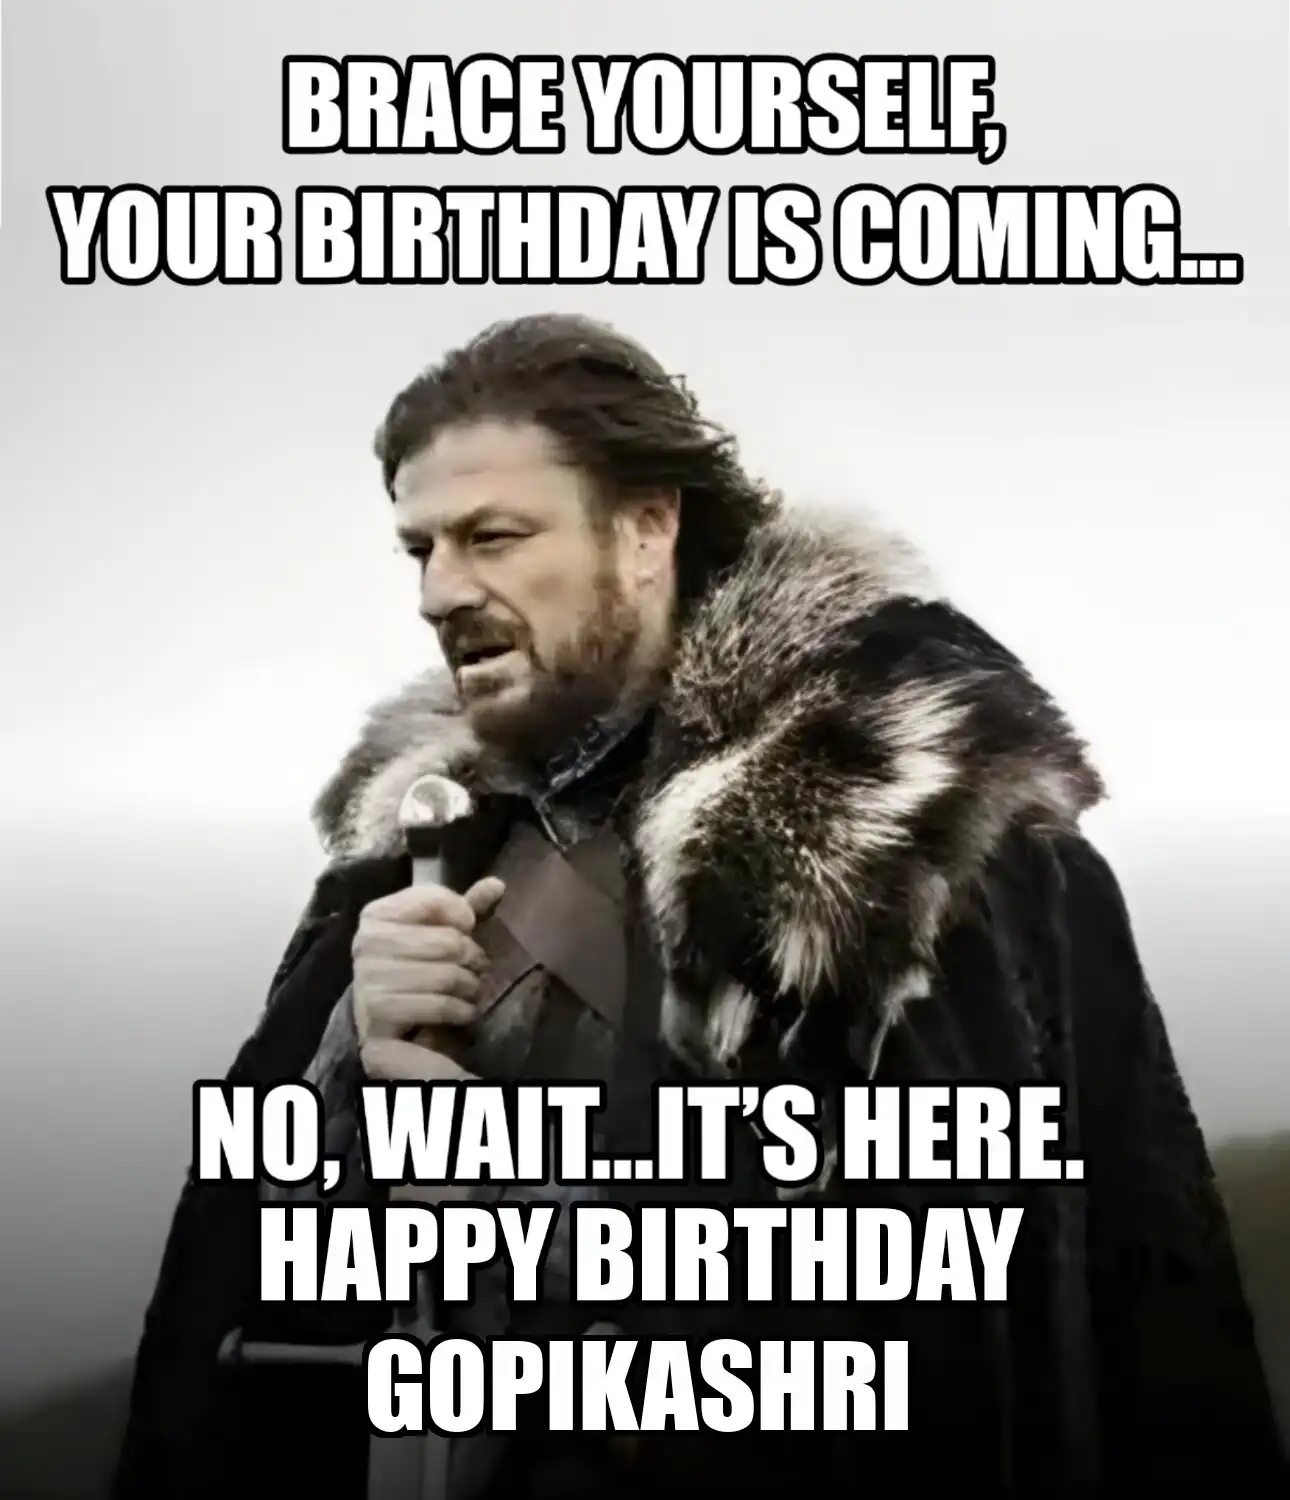 Happy Birthday Gopikashri Brace Yourself Your Birthday Is Coming Meme